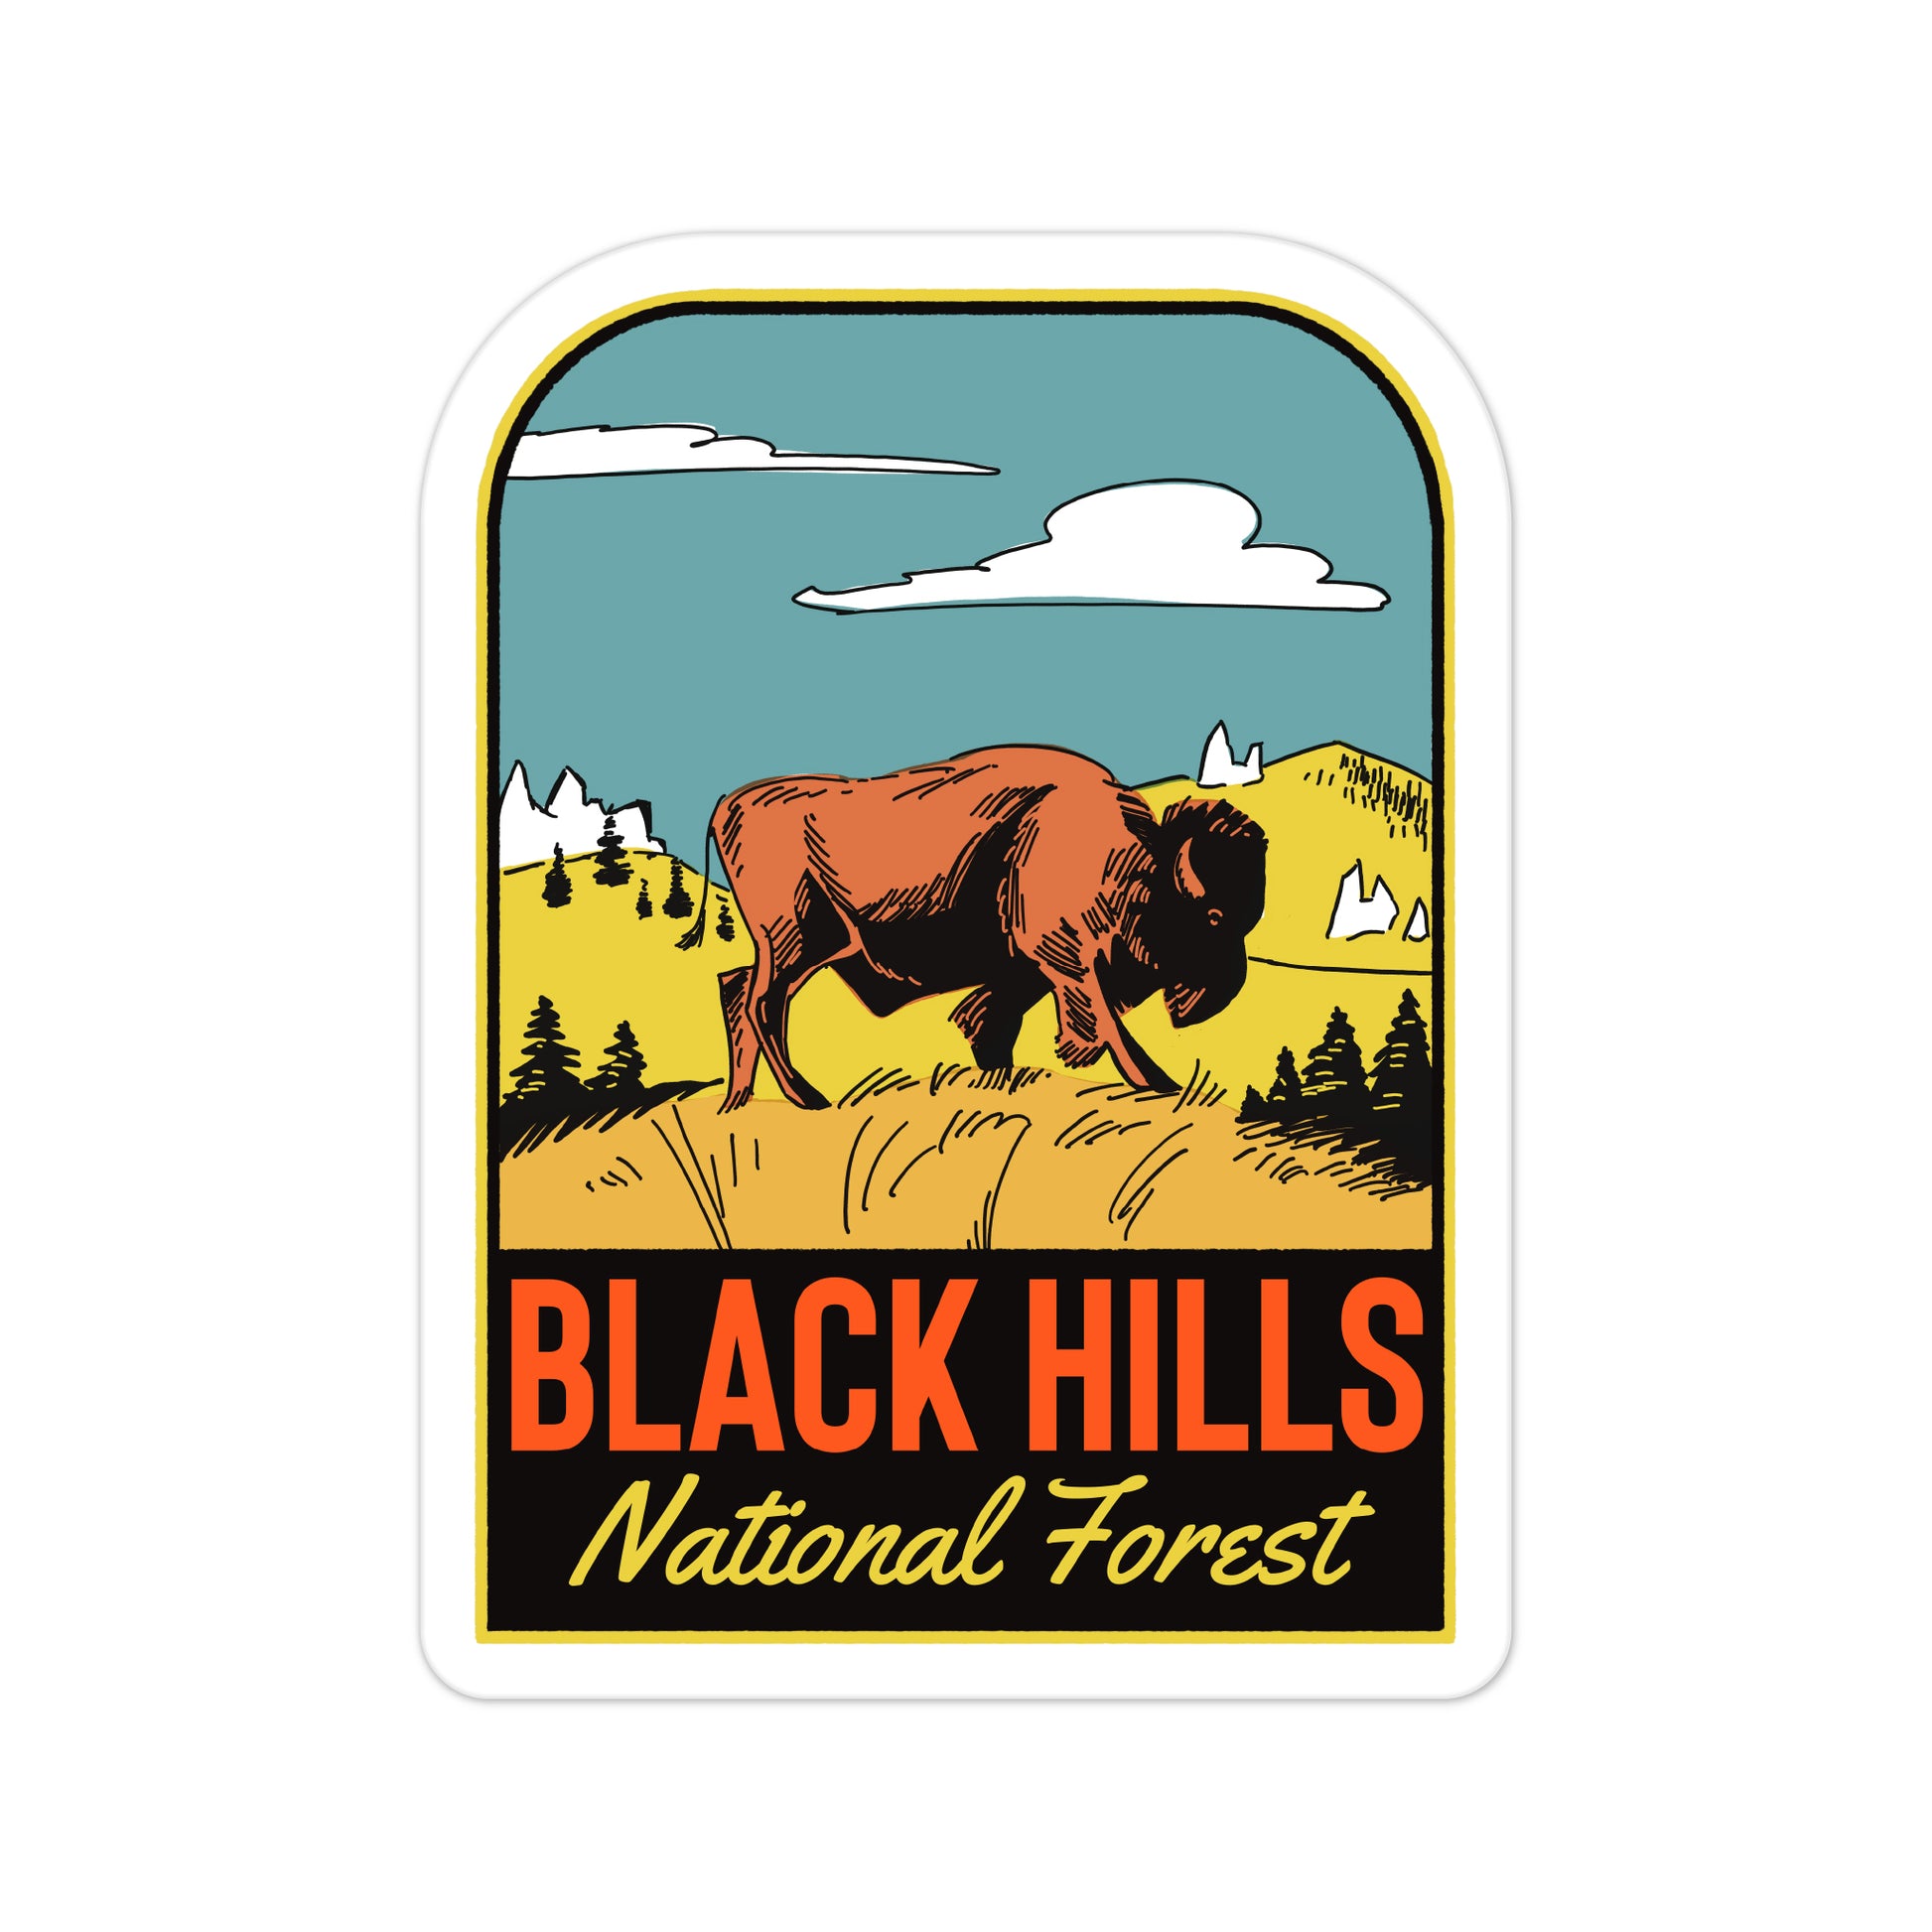 A sticker of Black Hills National Forest